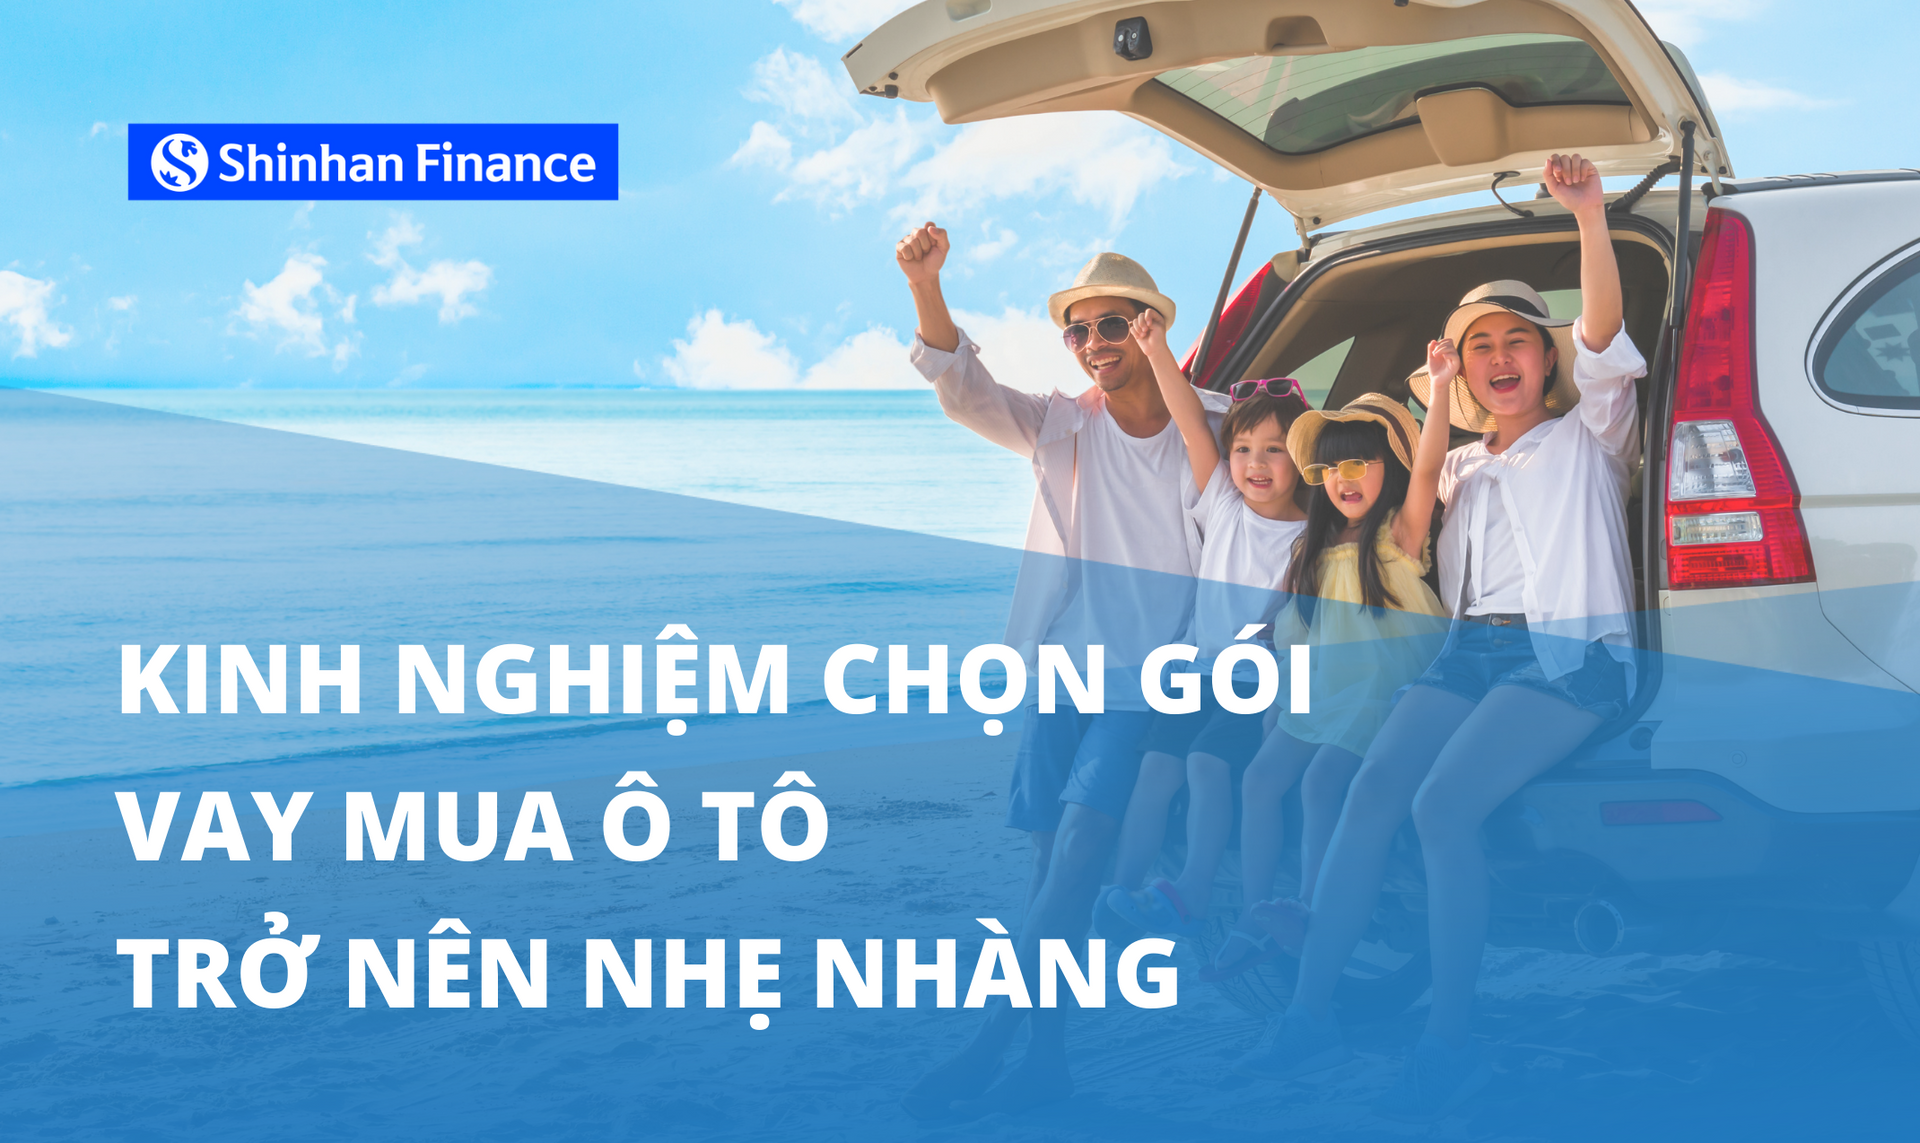 shinhan-finance-kinh-nghiem-chon-goi-vay-mua-o-to-tro-nen-nhe-nhang.png